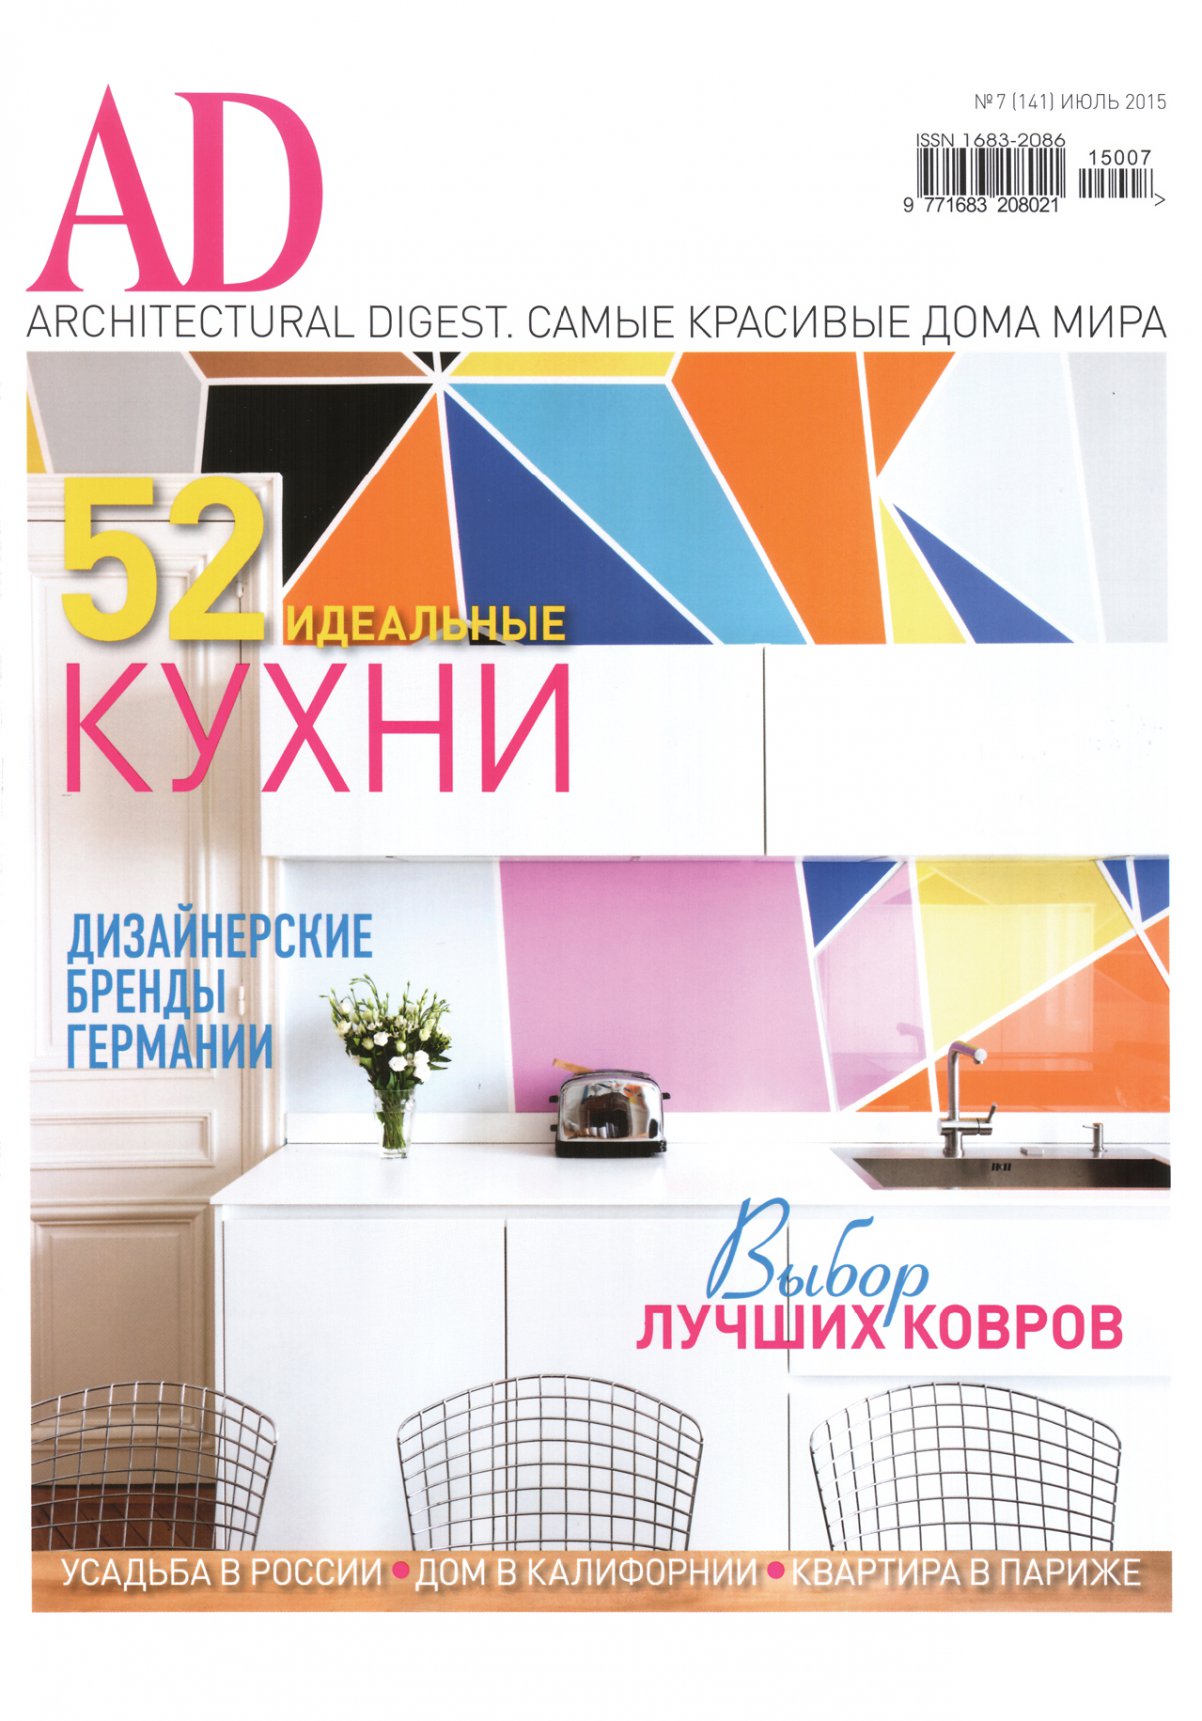 Архитектурный дайджест журнал